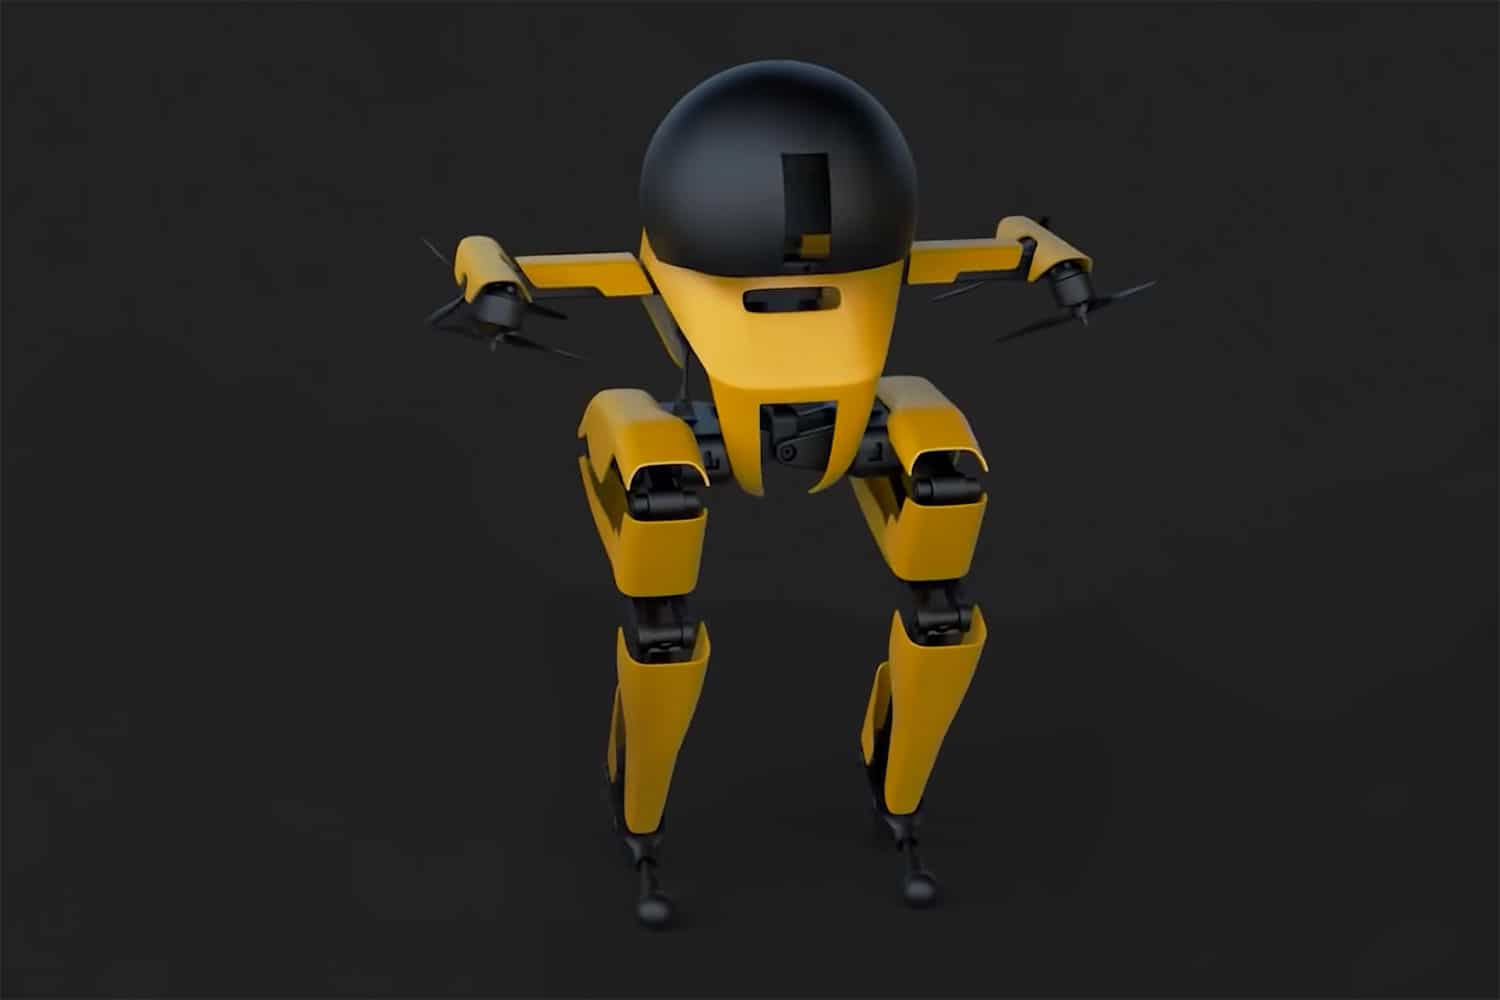 Meet LEONARDO, a bipedal robot that can fly, walk, and skateboard.